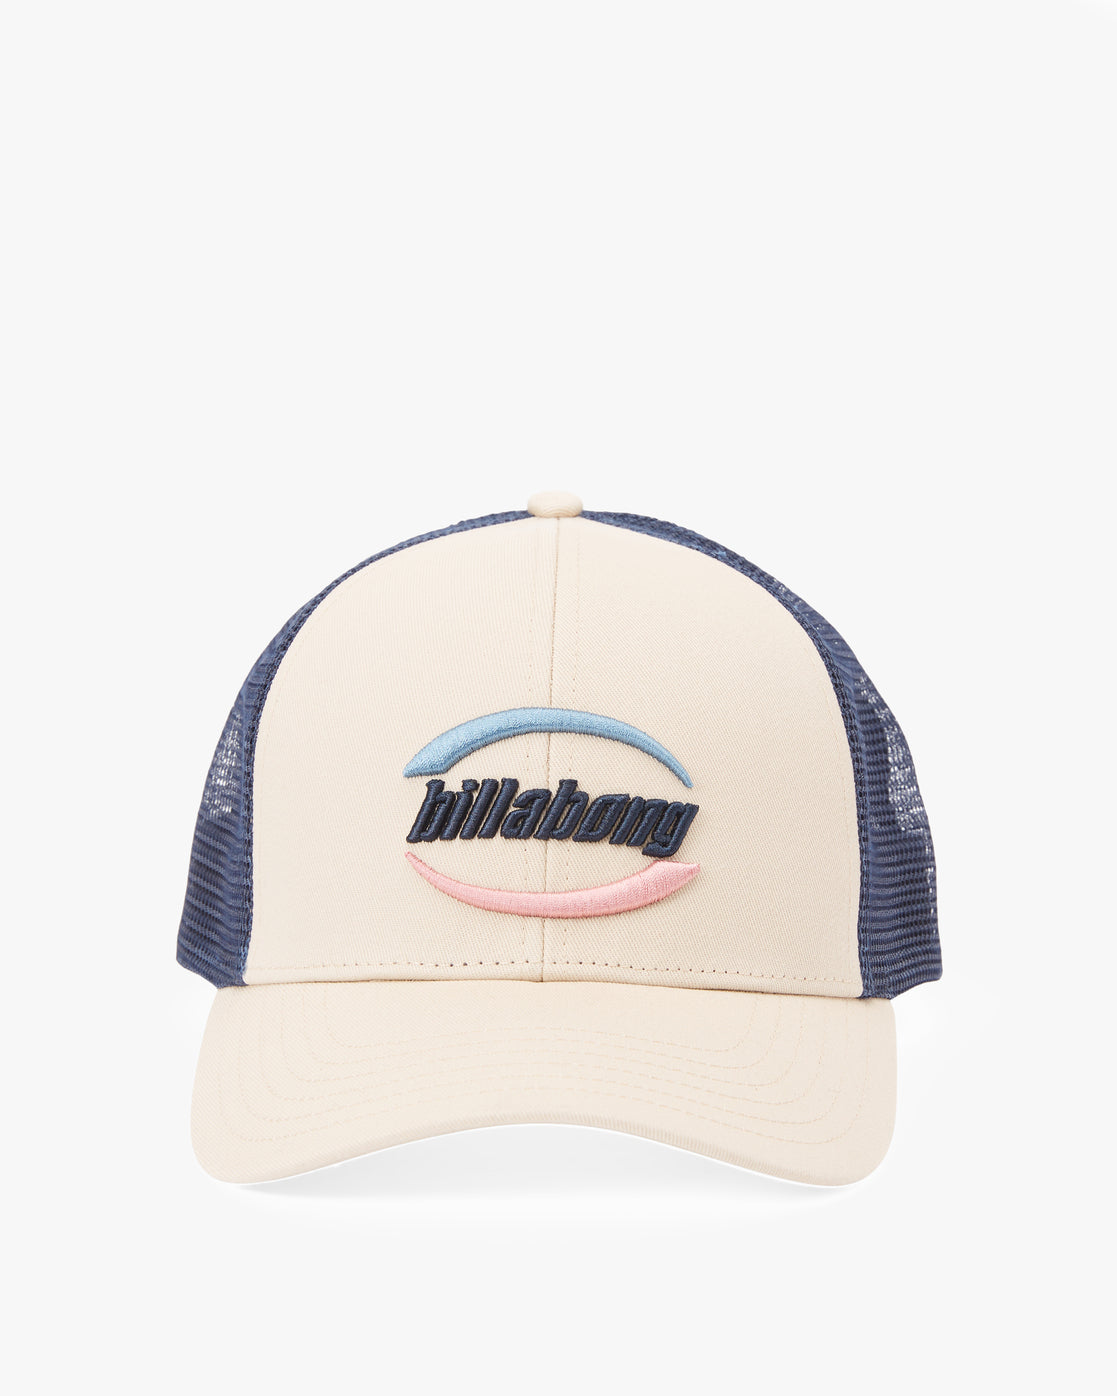 - Sand Surf – Sand Walled Trucker Billabong Hat